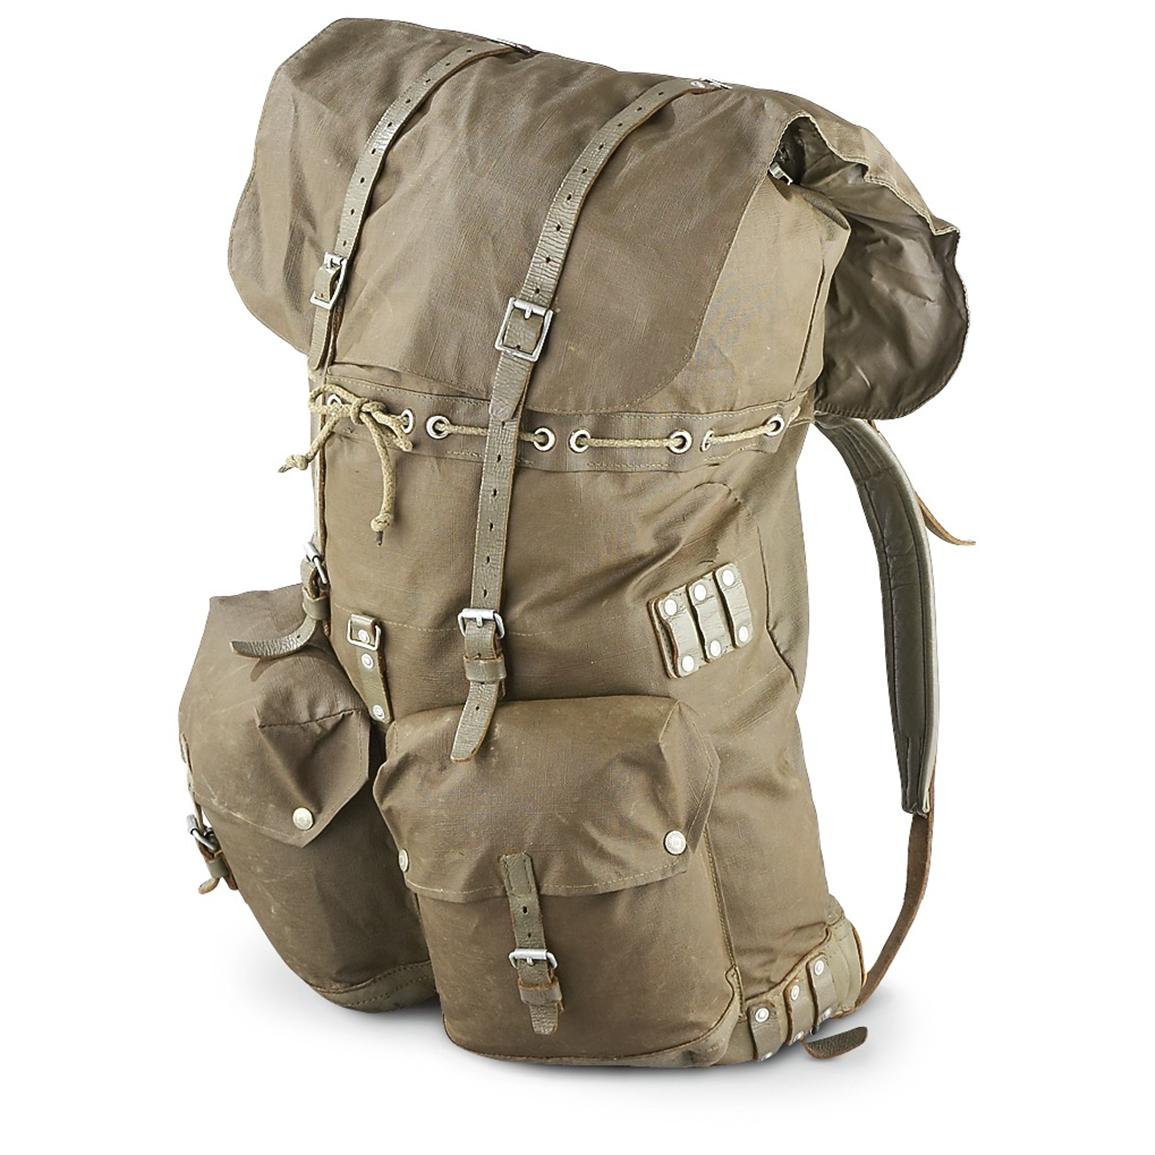 Camelbak pack running gear, buy galaxy backpack cheap, swiss backpacks ...